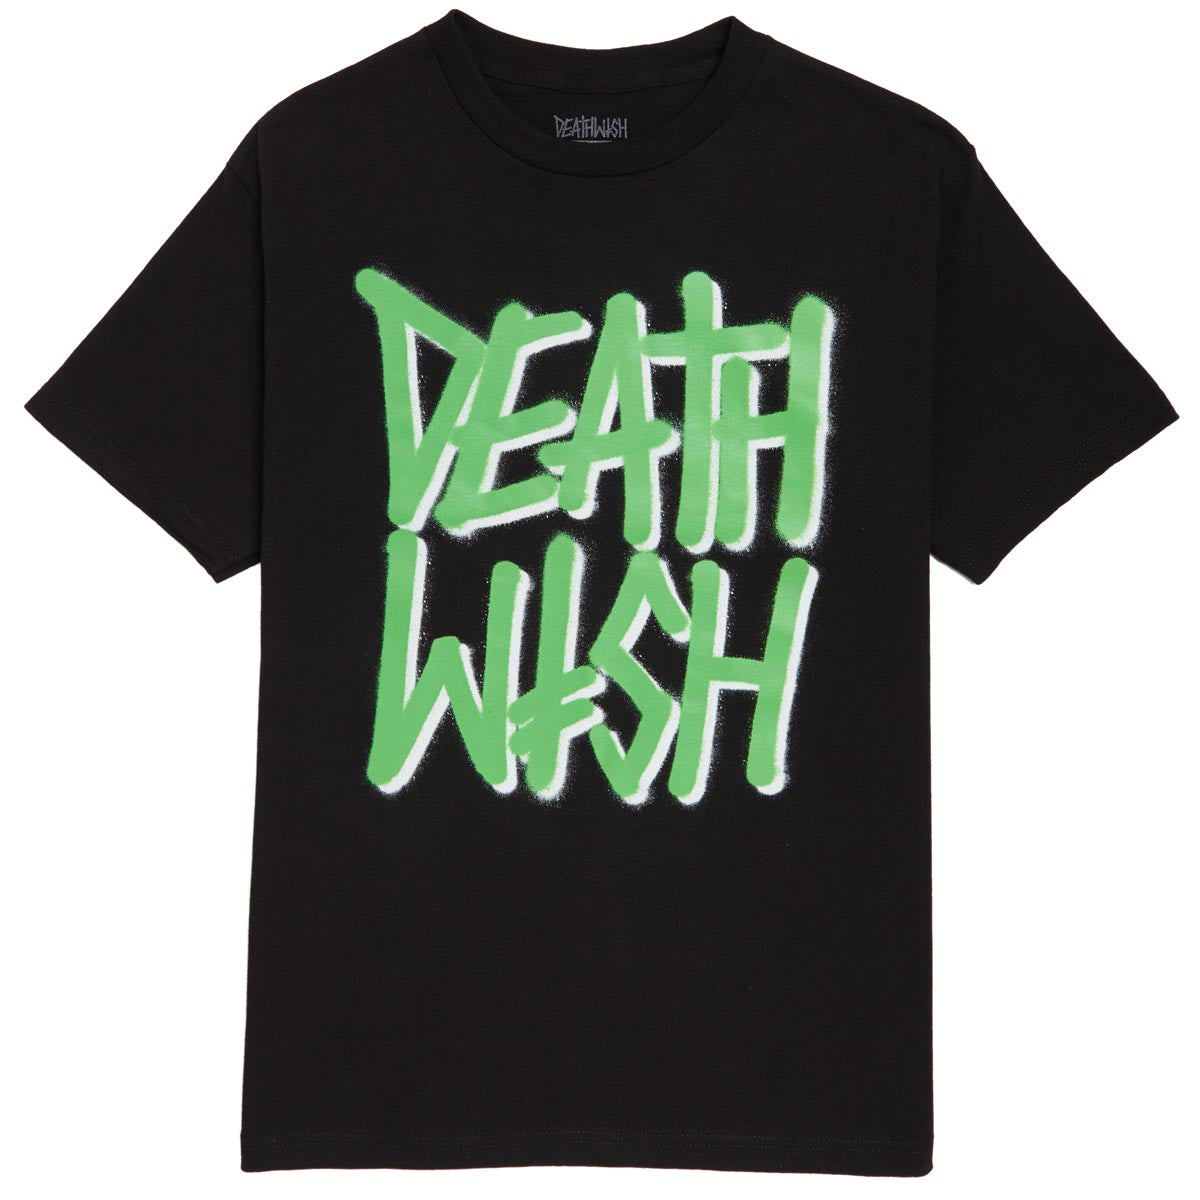 Deathwish Death Stack T-Shirt - Black/Green image 1